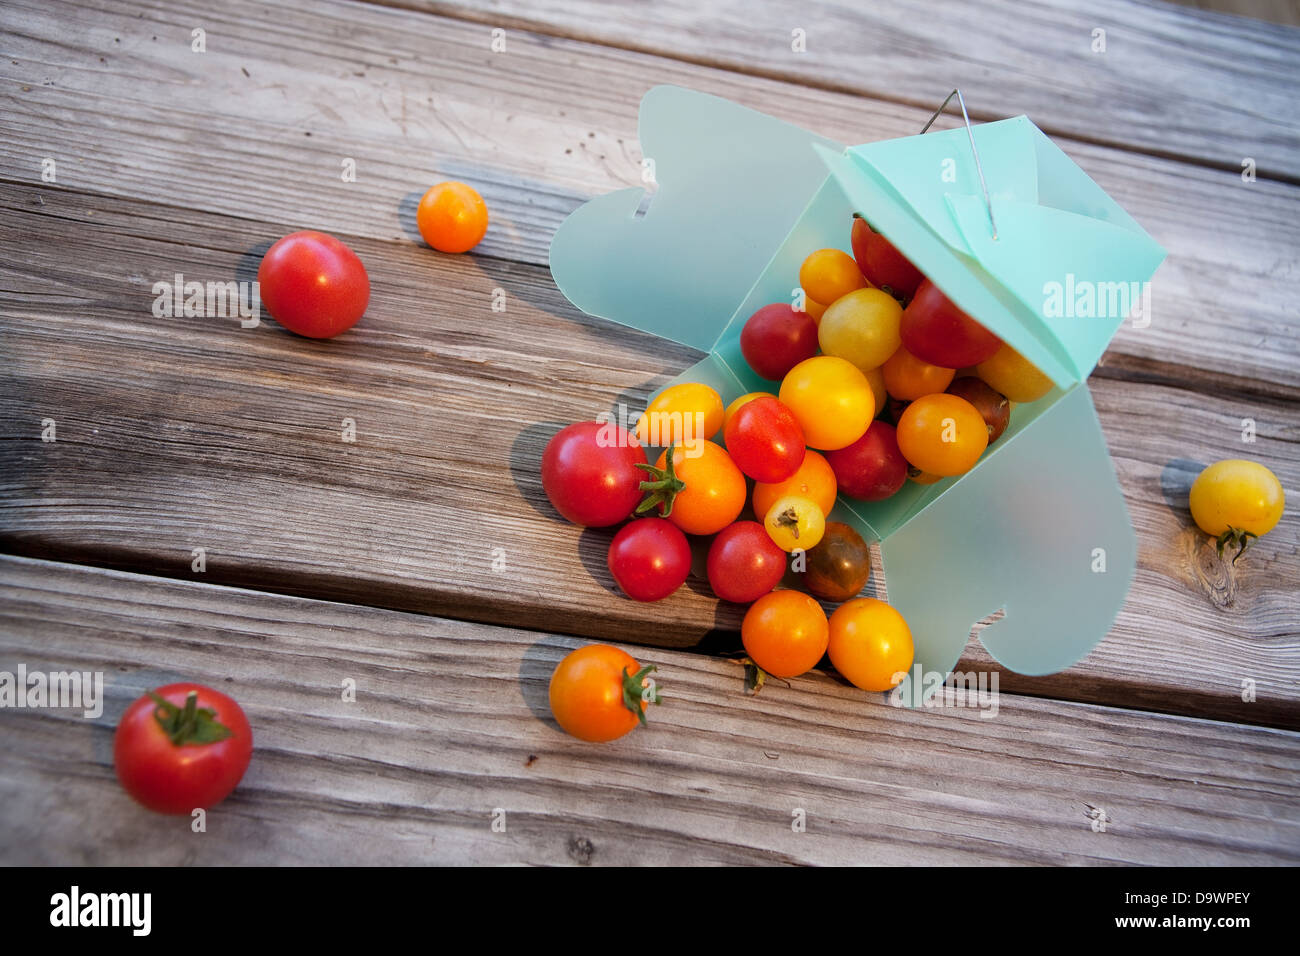 cherry tomatoes Stock Photo